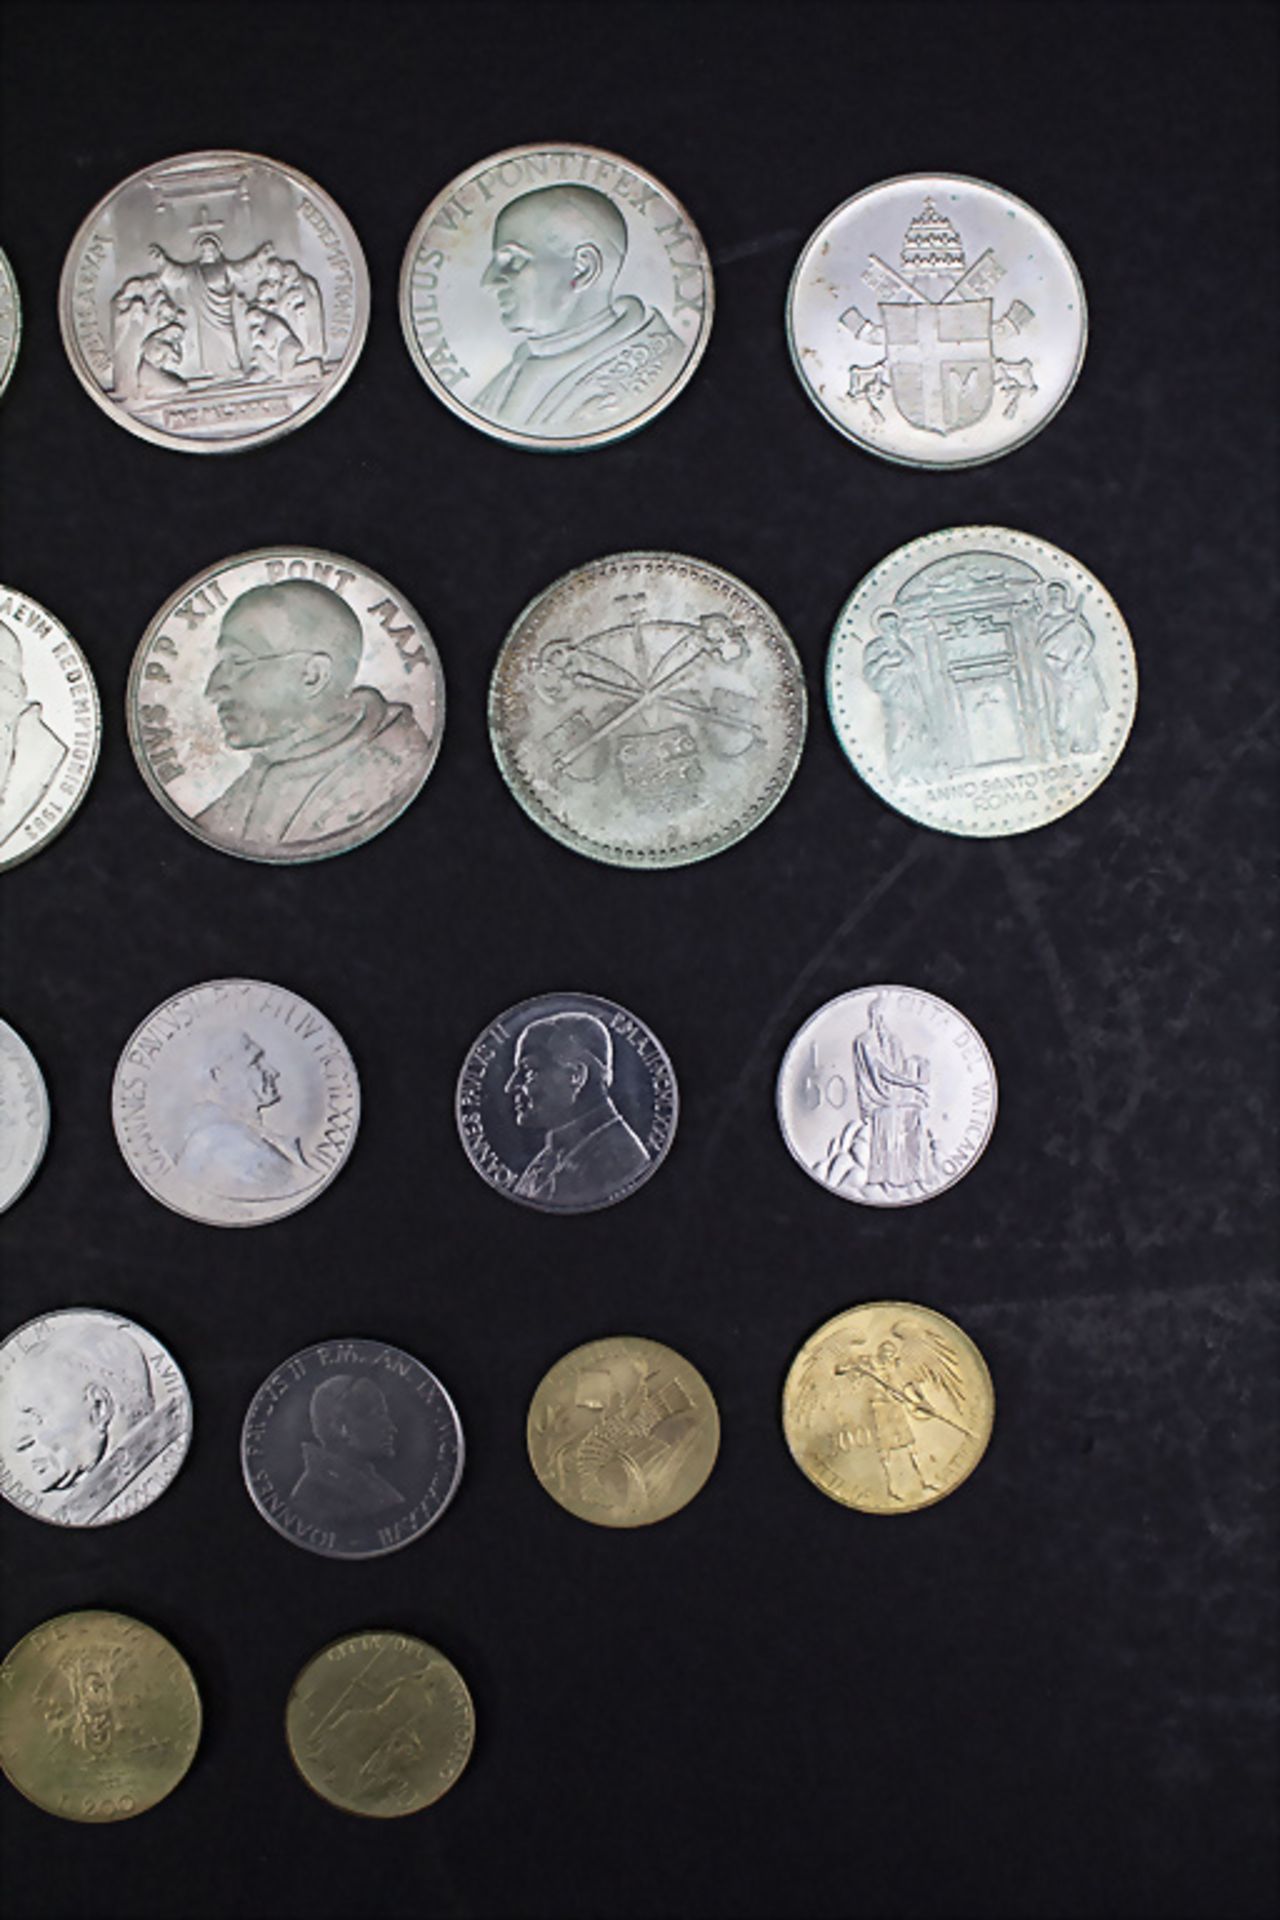 Sammlung Münzen und Medaillen des Vatikan / A collection of Vatican coins and medals - Image 4 of 10